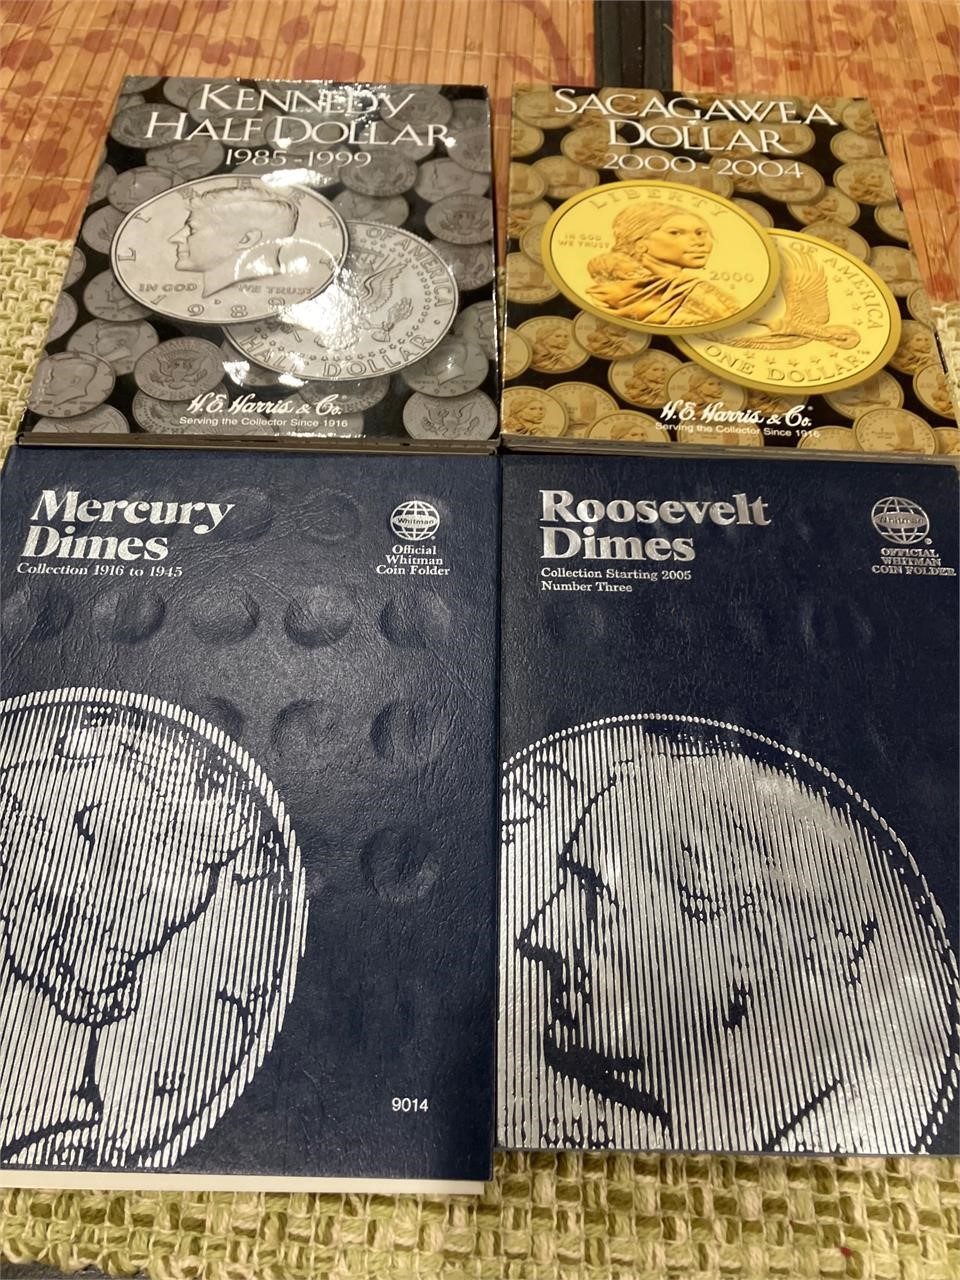 Empty coin holder s Kennedy,mercury